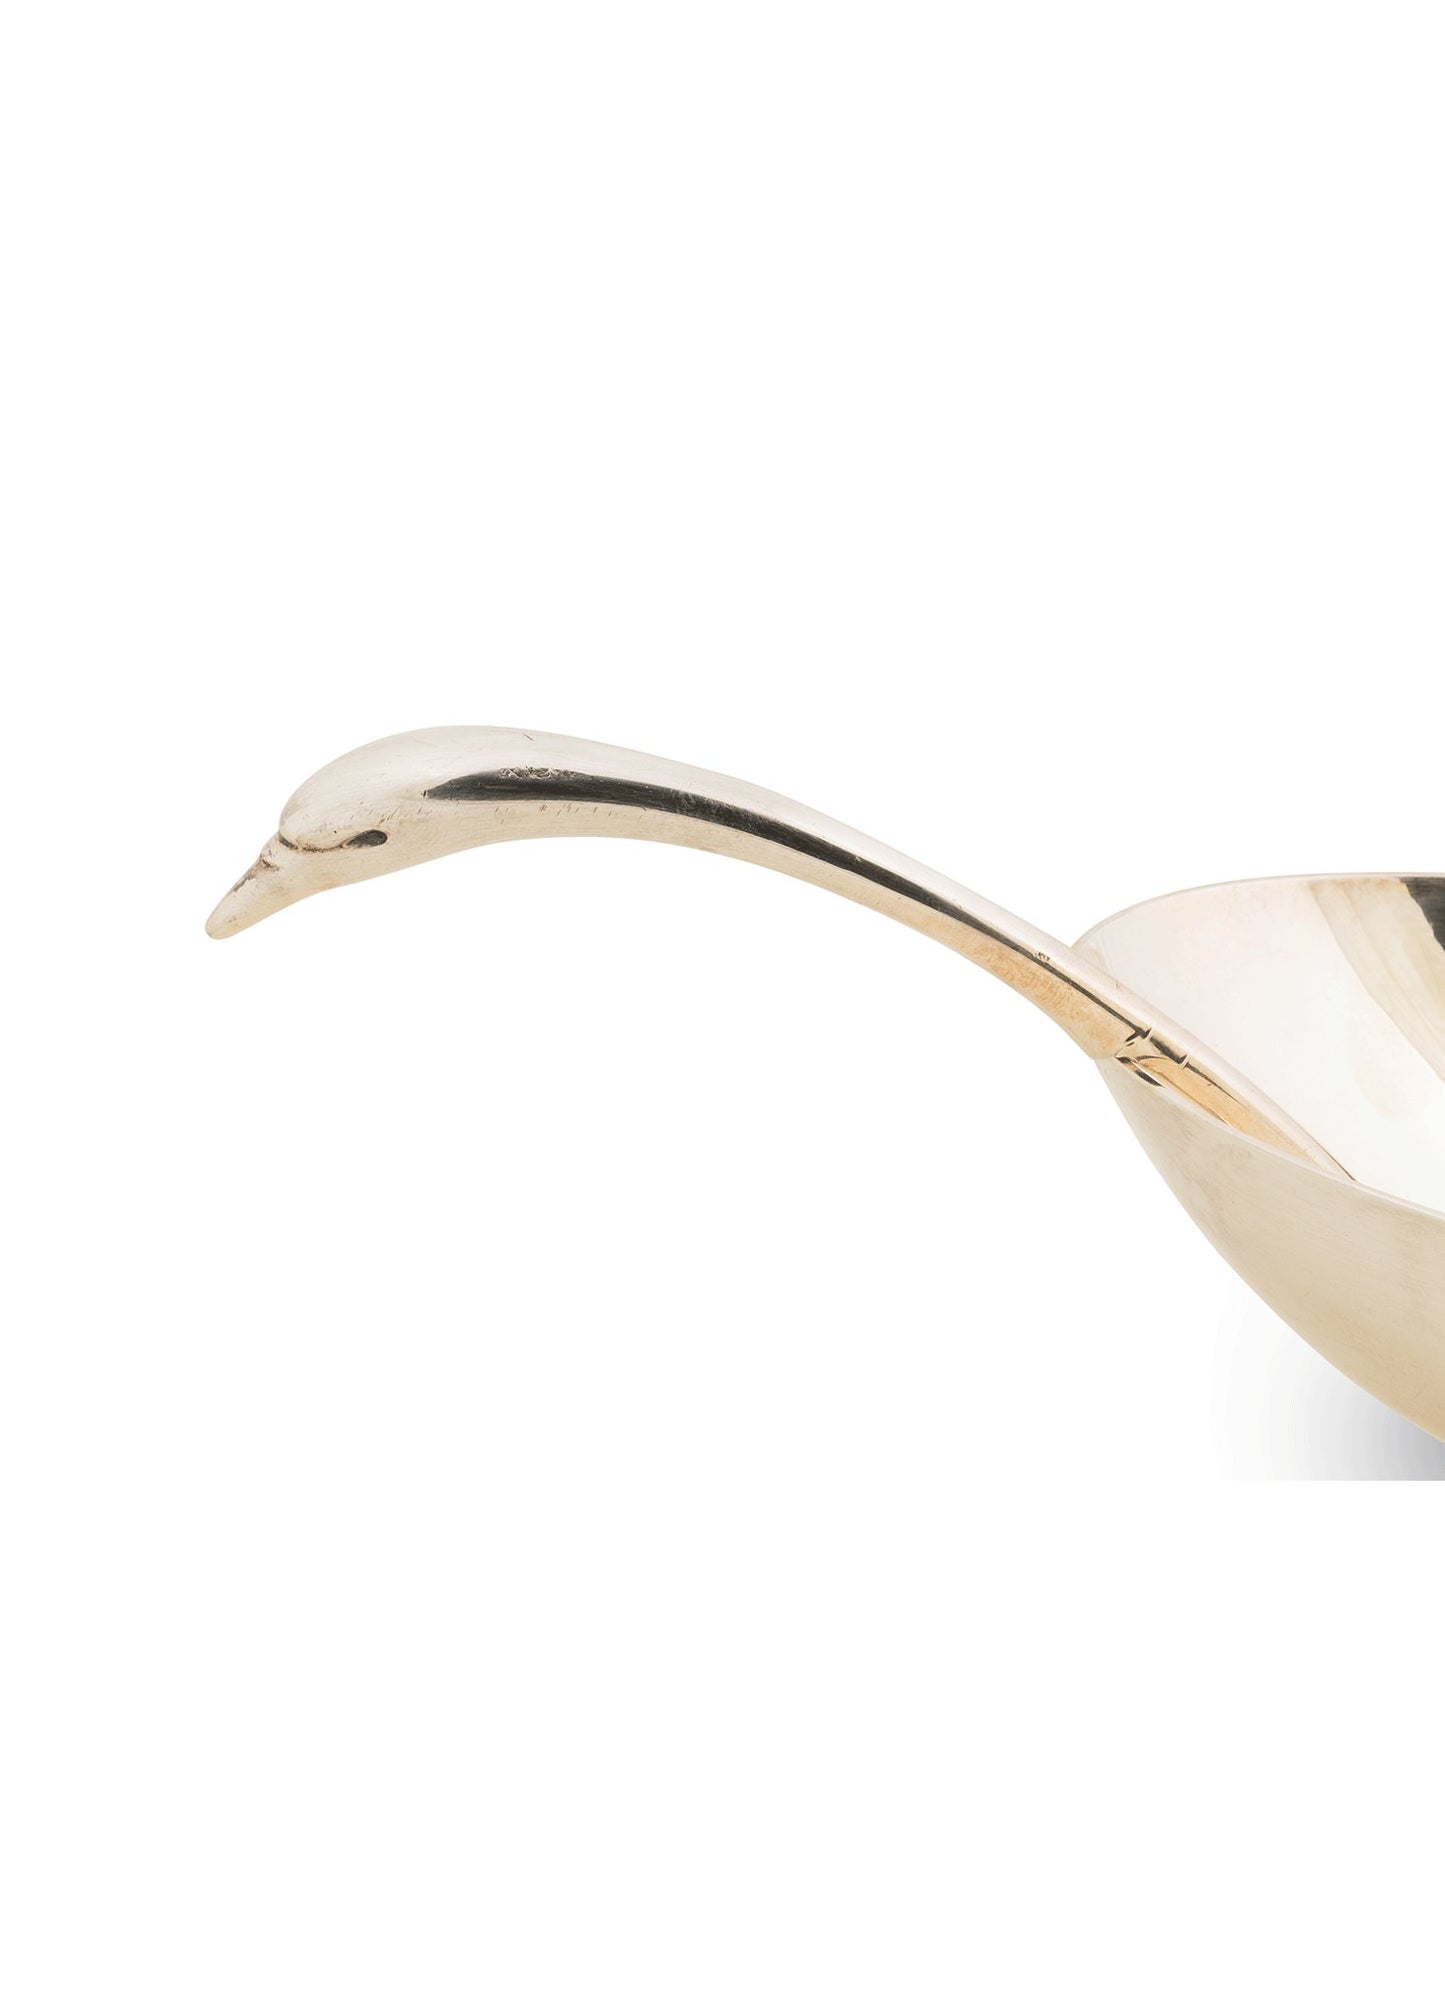 Vintage Art Deco Swan Saucière and Ladle by Christian Fjerdingstad for Christofle Gallia